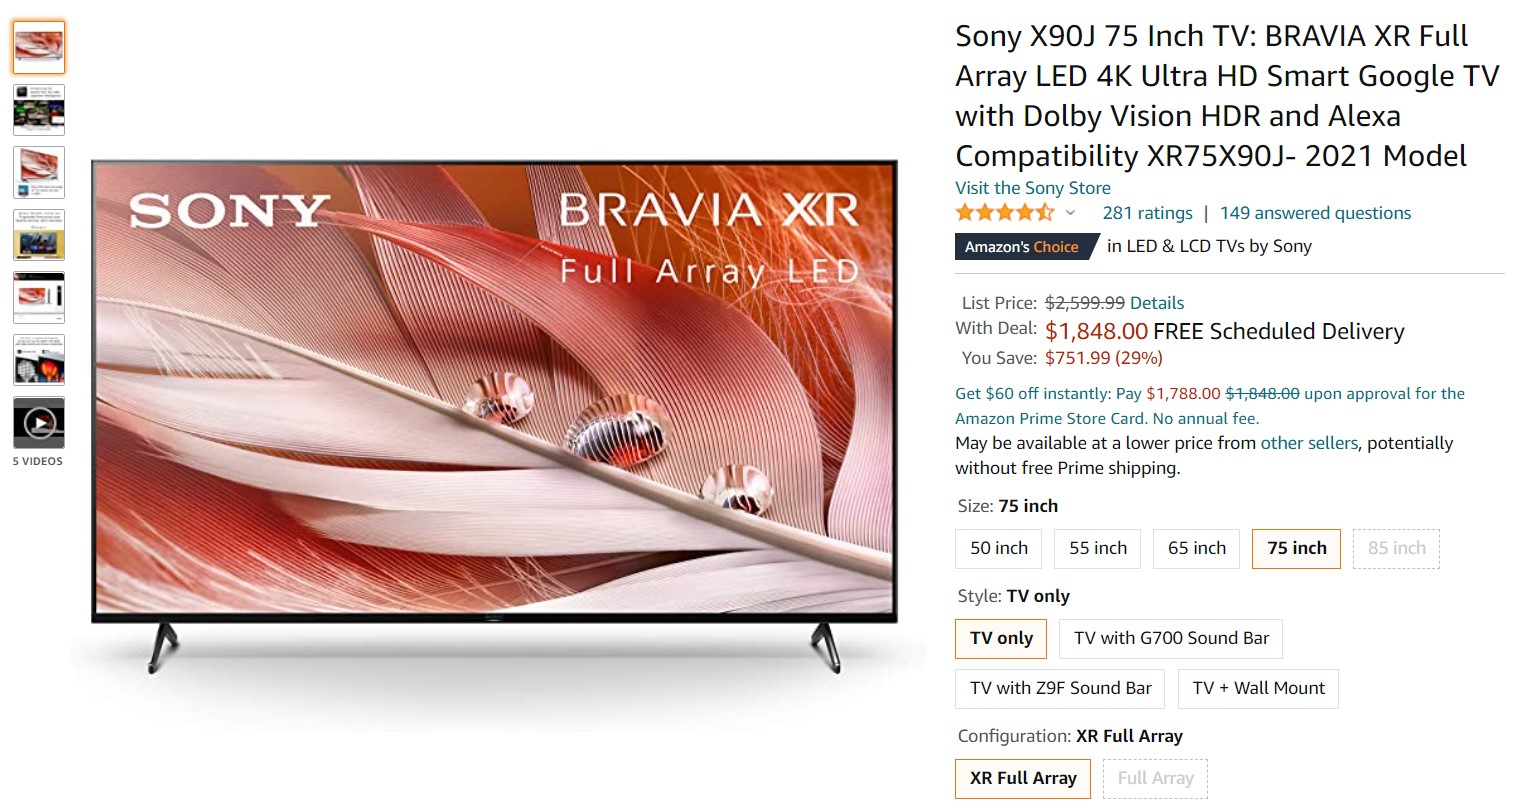 Sony X90J 75 pouces Bravia XR 4K UHD Smart Google TV Offre Amazon